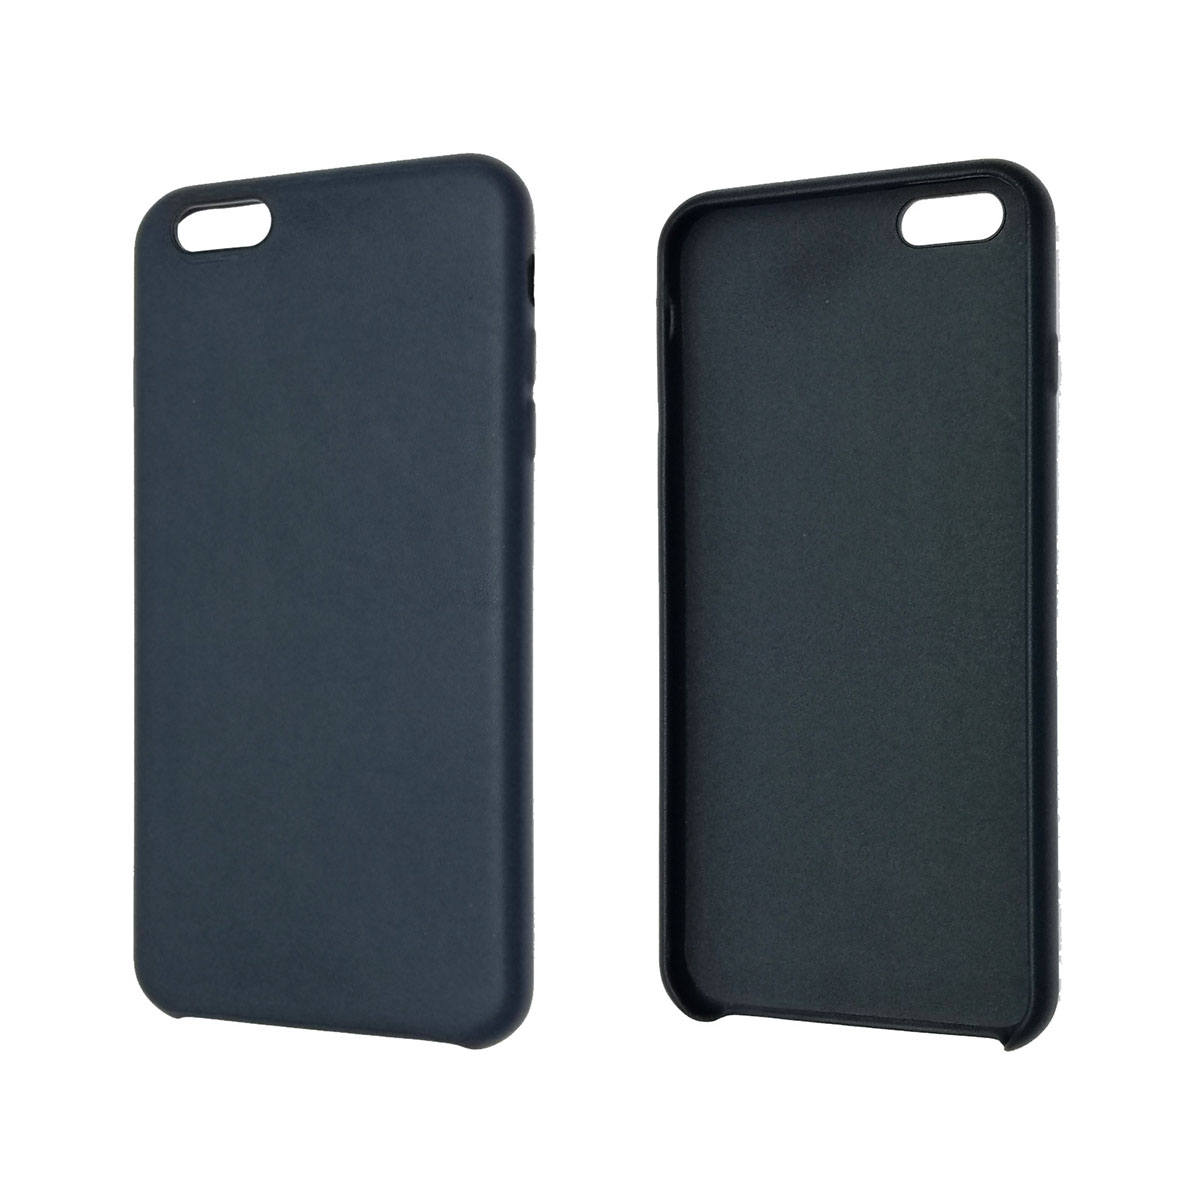 Чехол накладка Leather Case для APPLE iPhone 6 Plus, 6S Plus, экокожа, пластик, цвет синий.